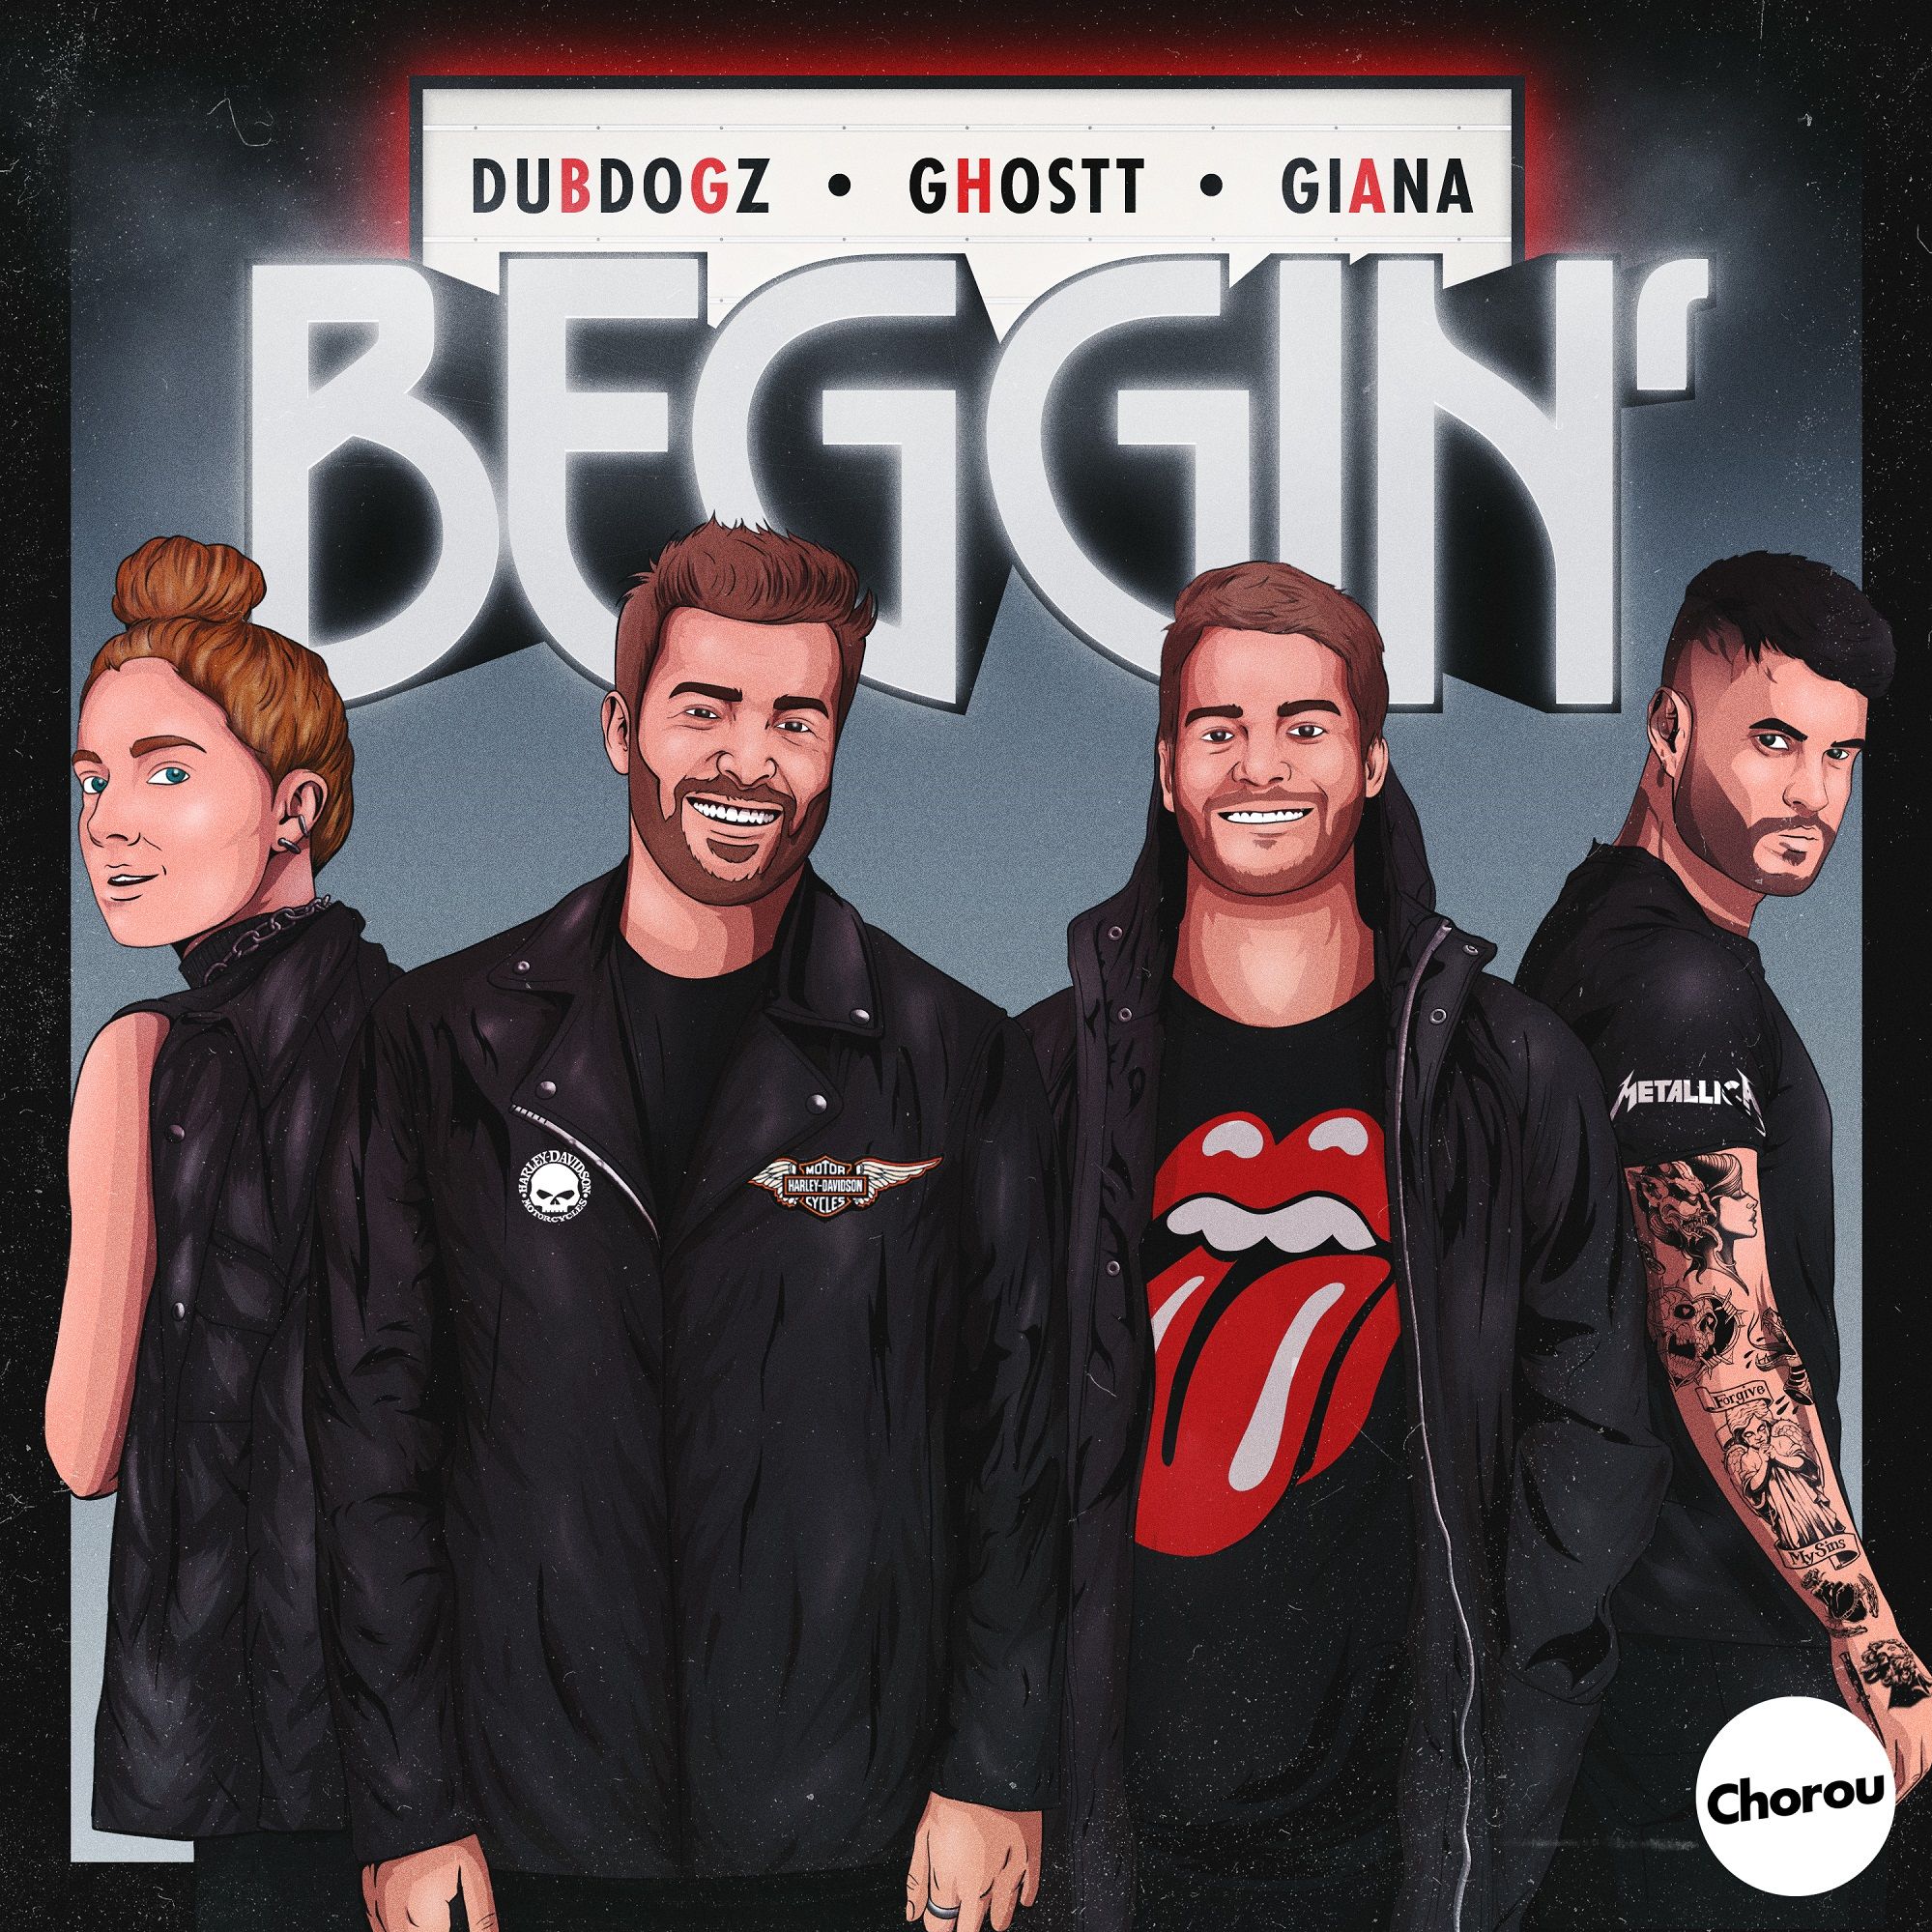 Scaricamento Dubdogz, Ghostt - Beggin' (feat. Giana) [Chorou Records]